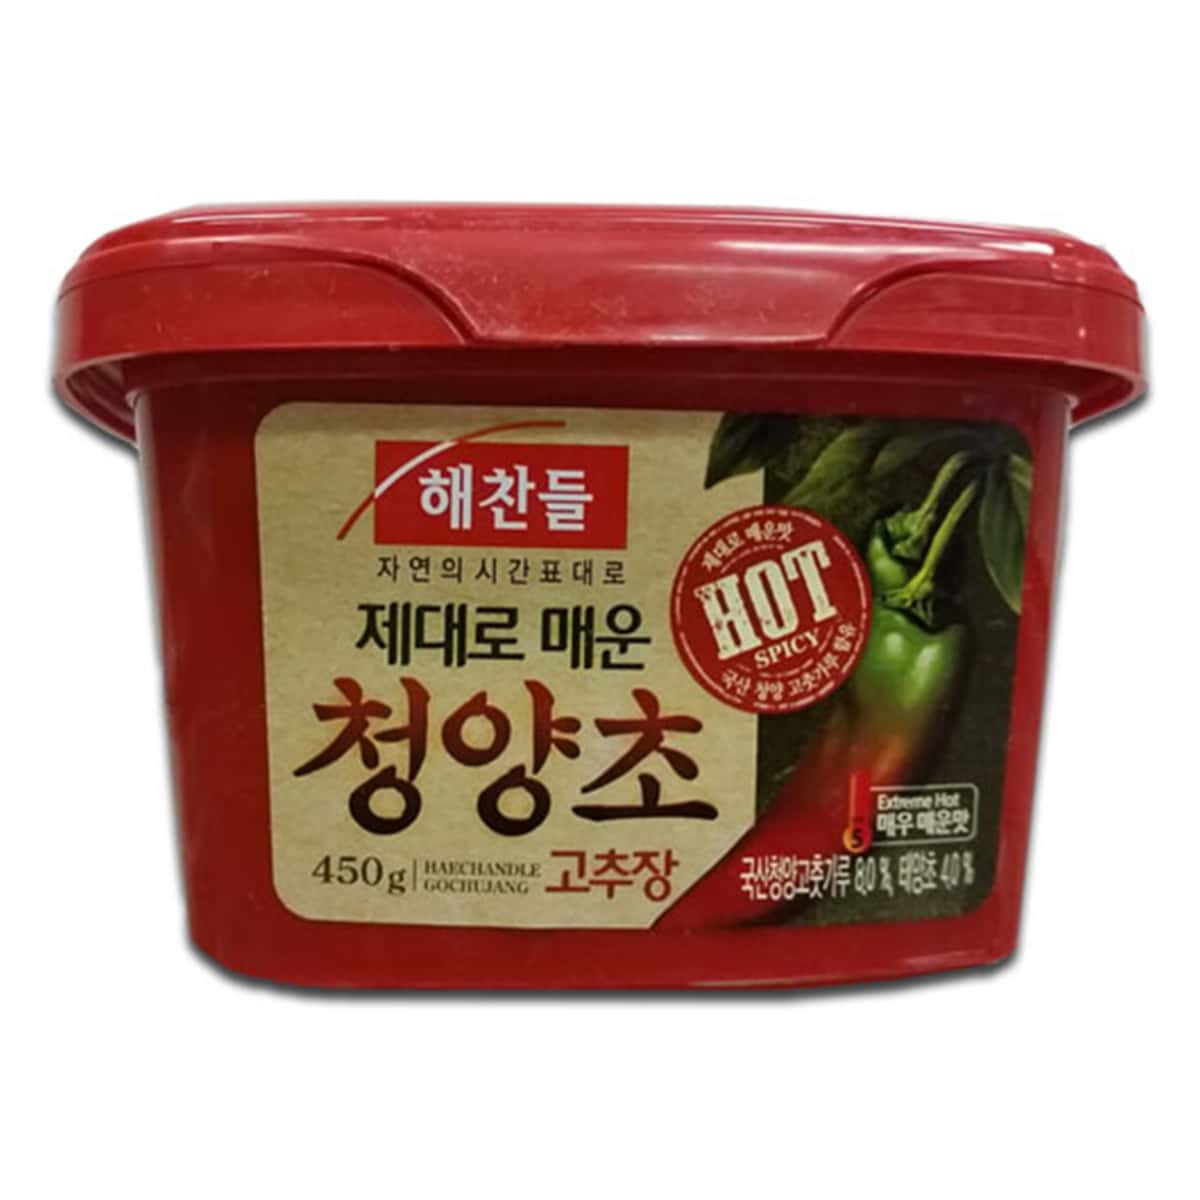 Buy CJ Haechandle Gochujang (Korean Hot Pepper Paste) Extreme Hot Spicy - 450 gm